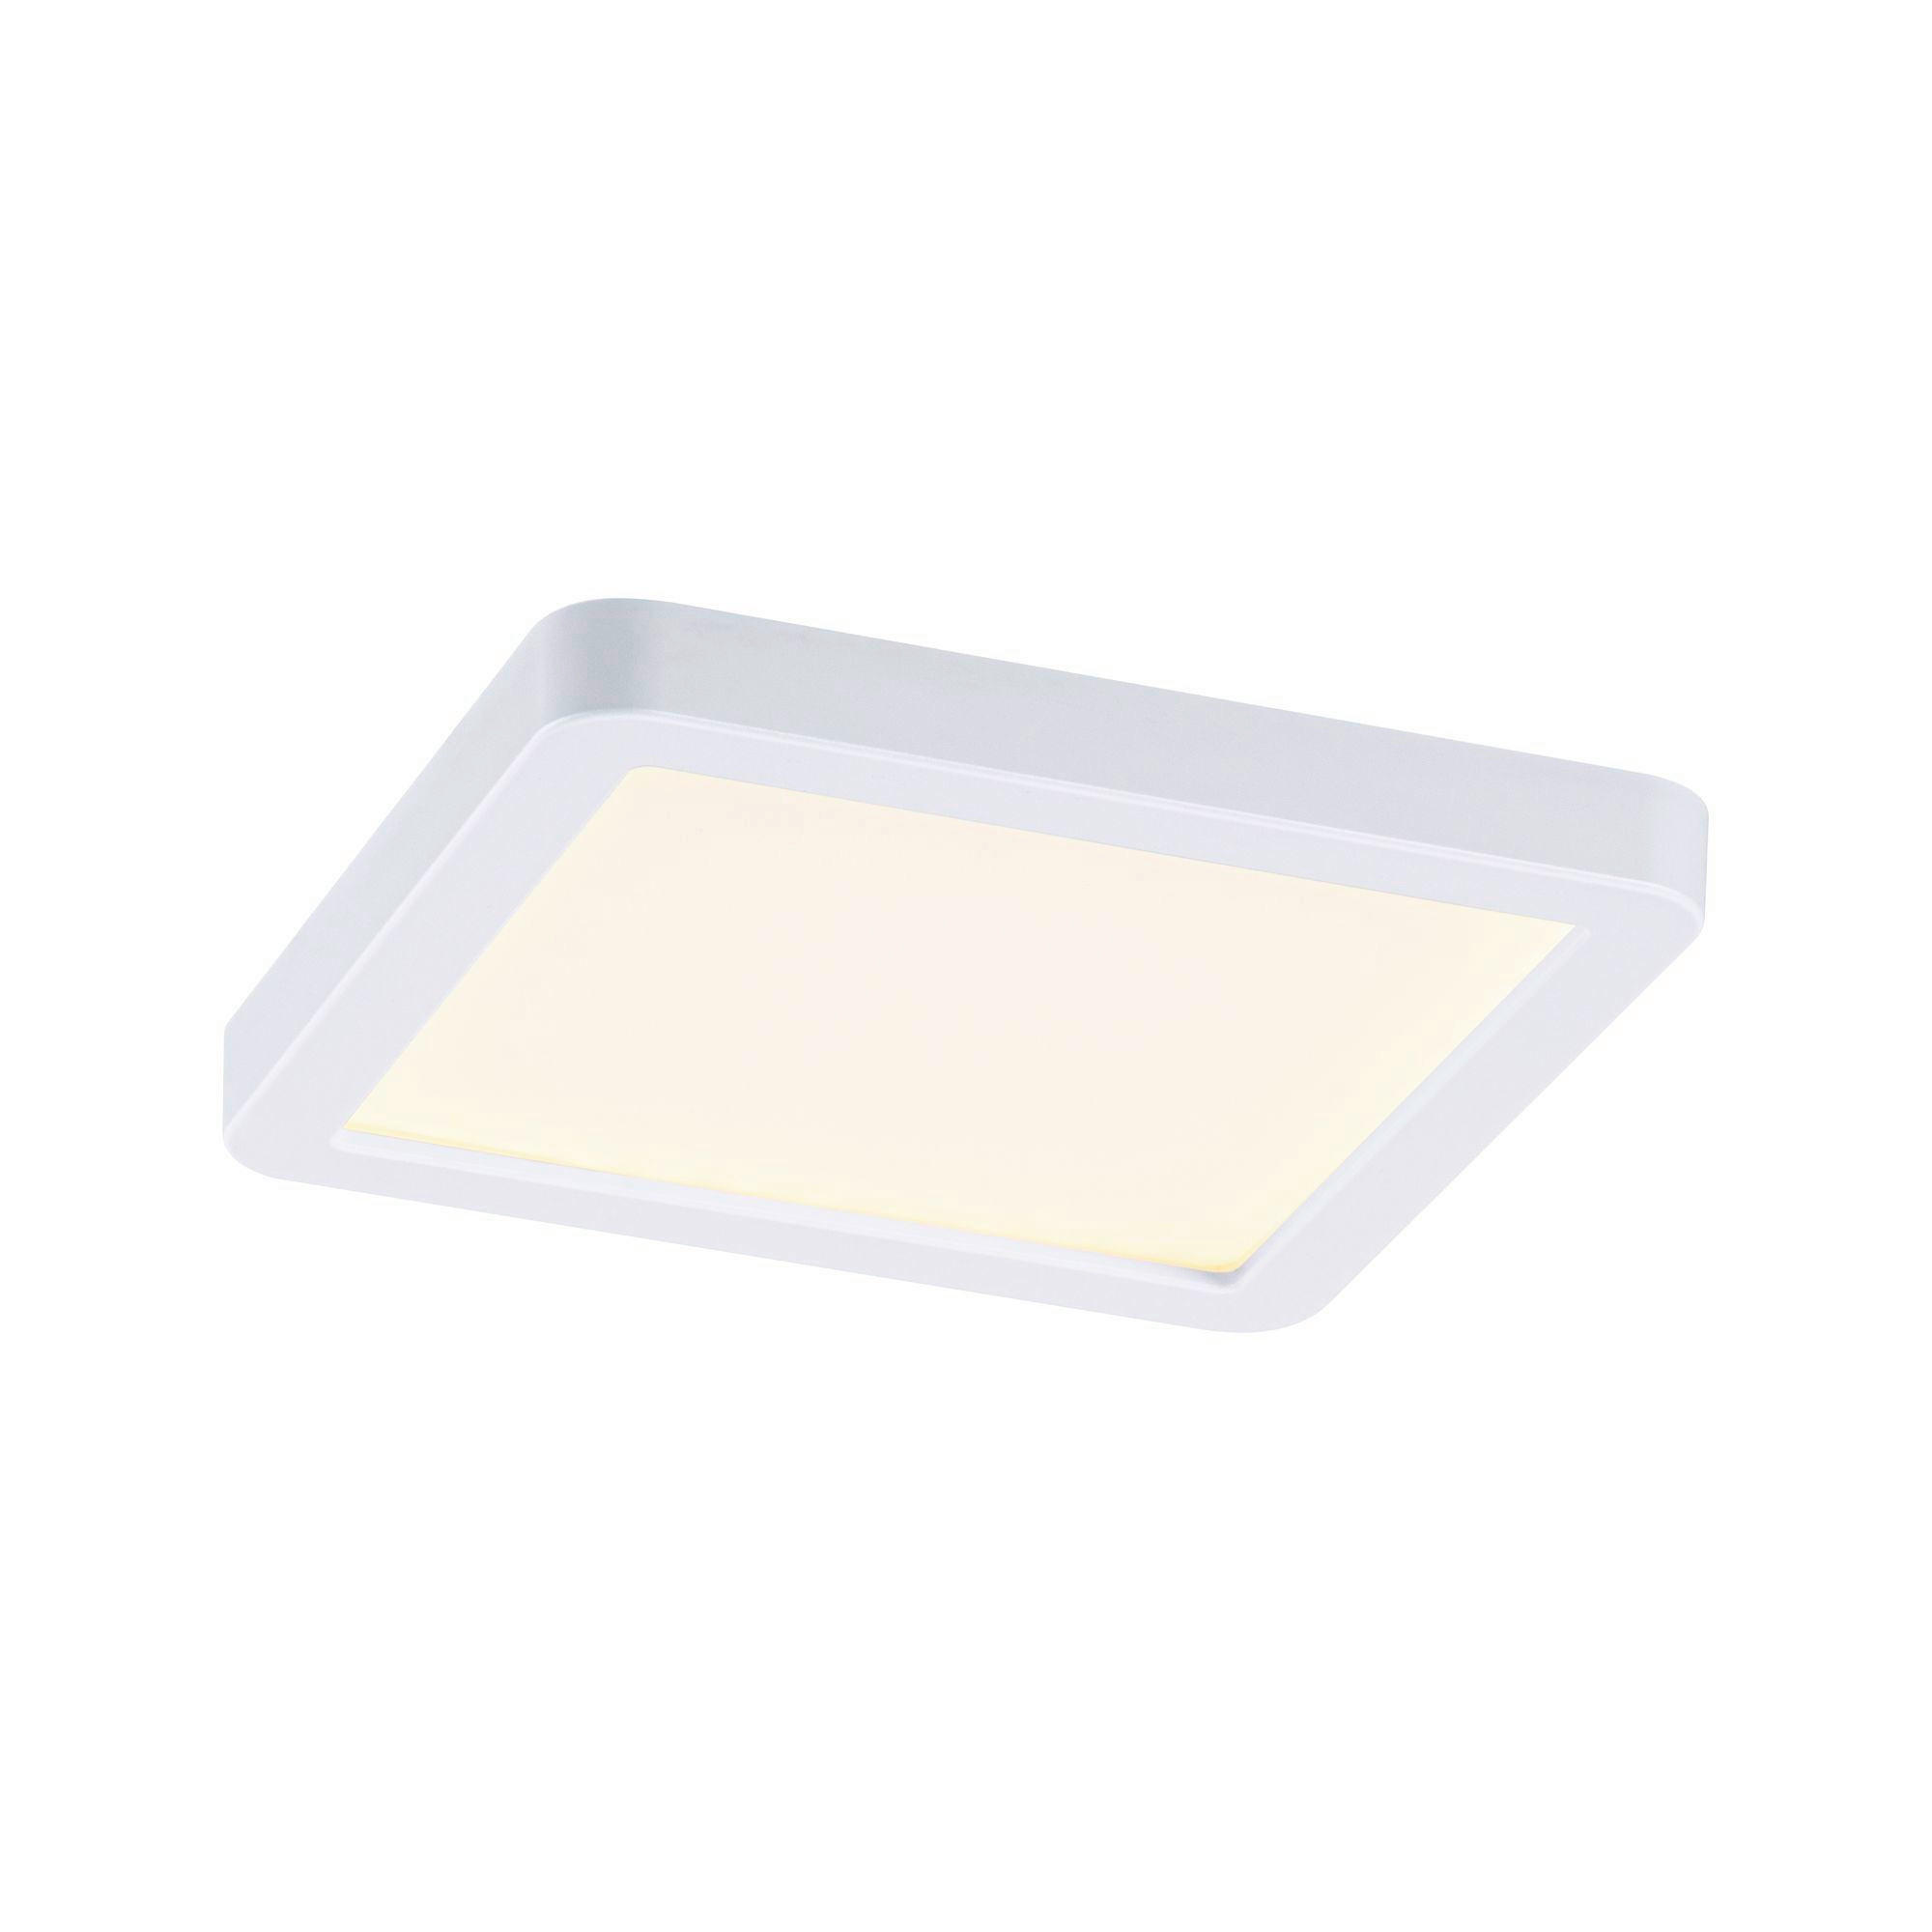 LED-PANEEL  - Weiß, Design, Kunststoff (11,8/11,8/1,2cm) - Paulmann